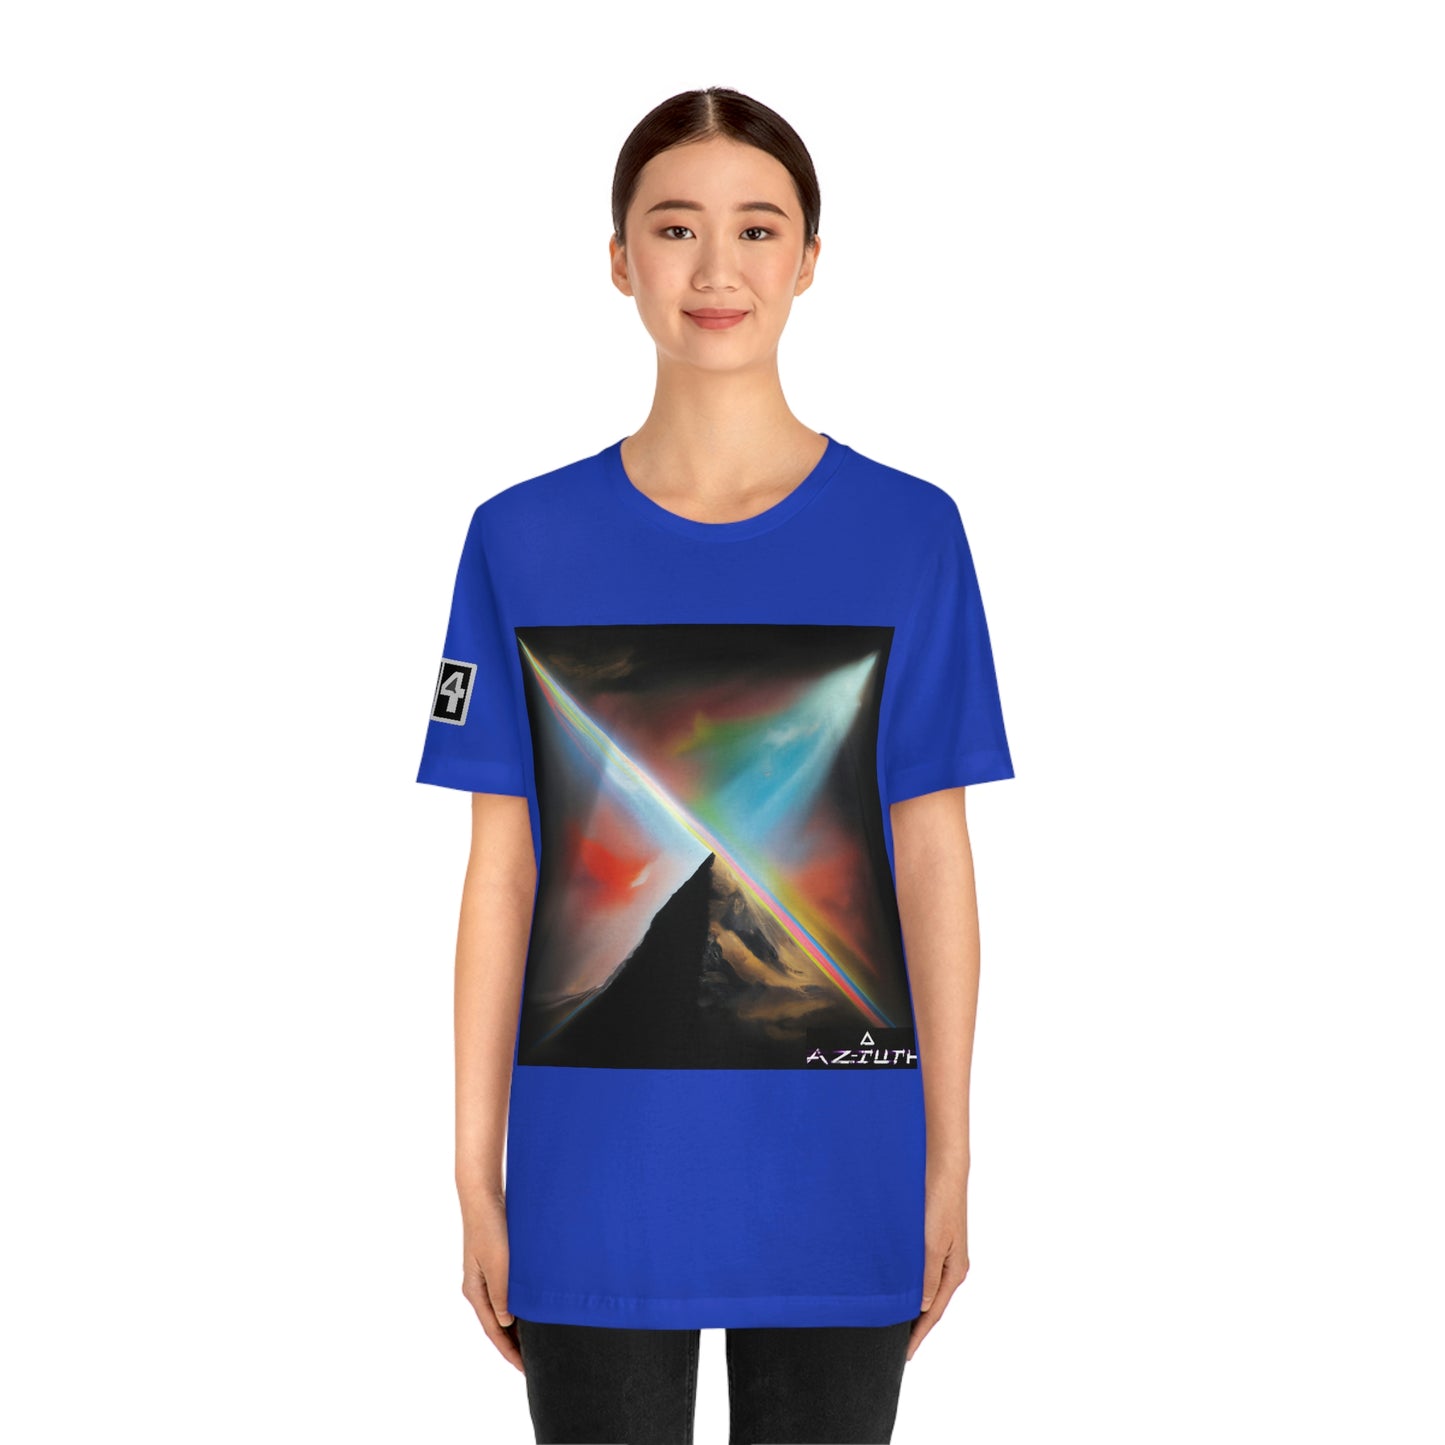 Atziluth Gallery "Light Pyramid" T-shirt